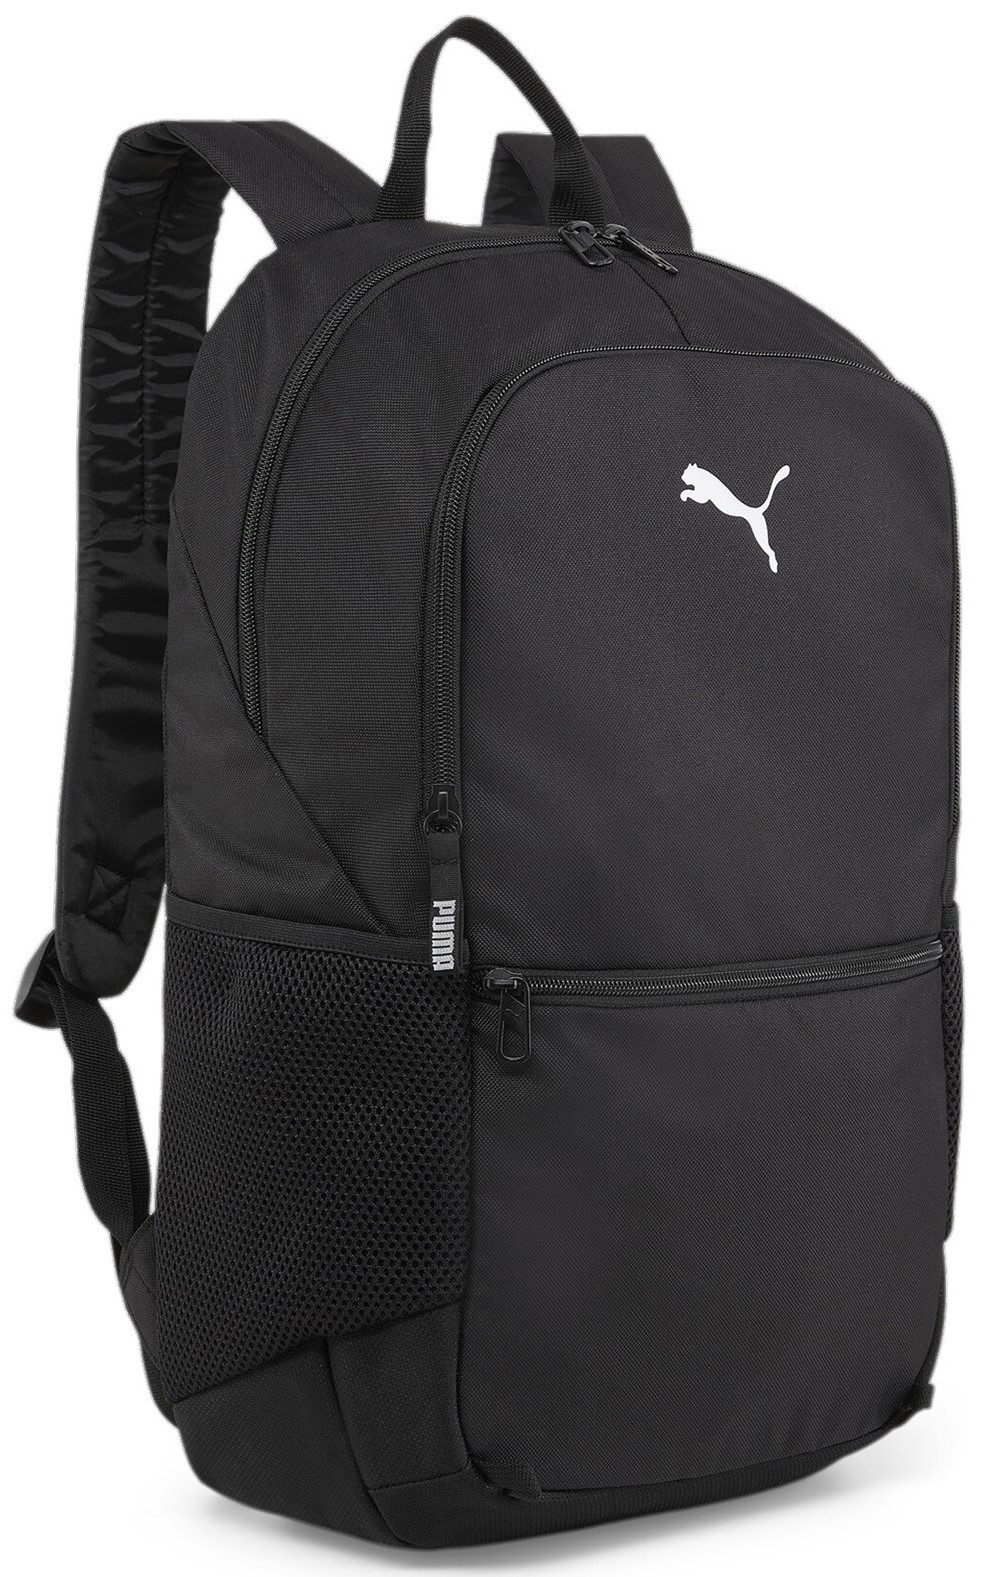 Rucksack Puma teamGOAL Backpack with ball net